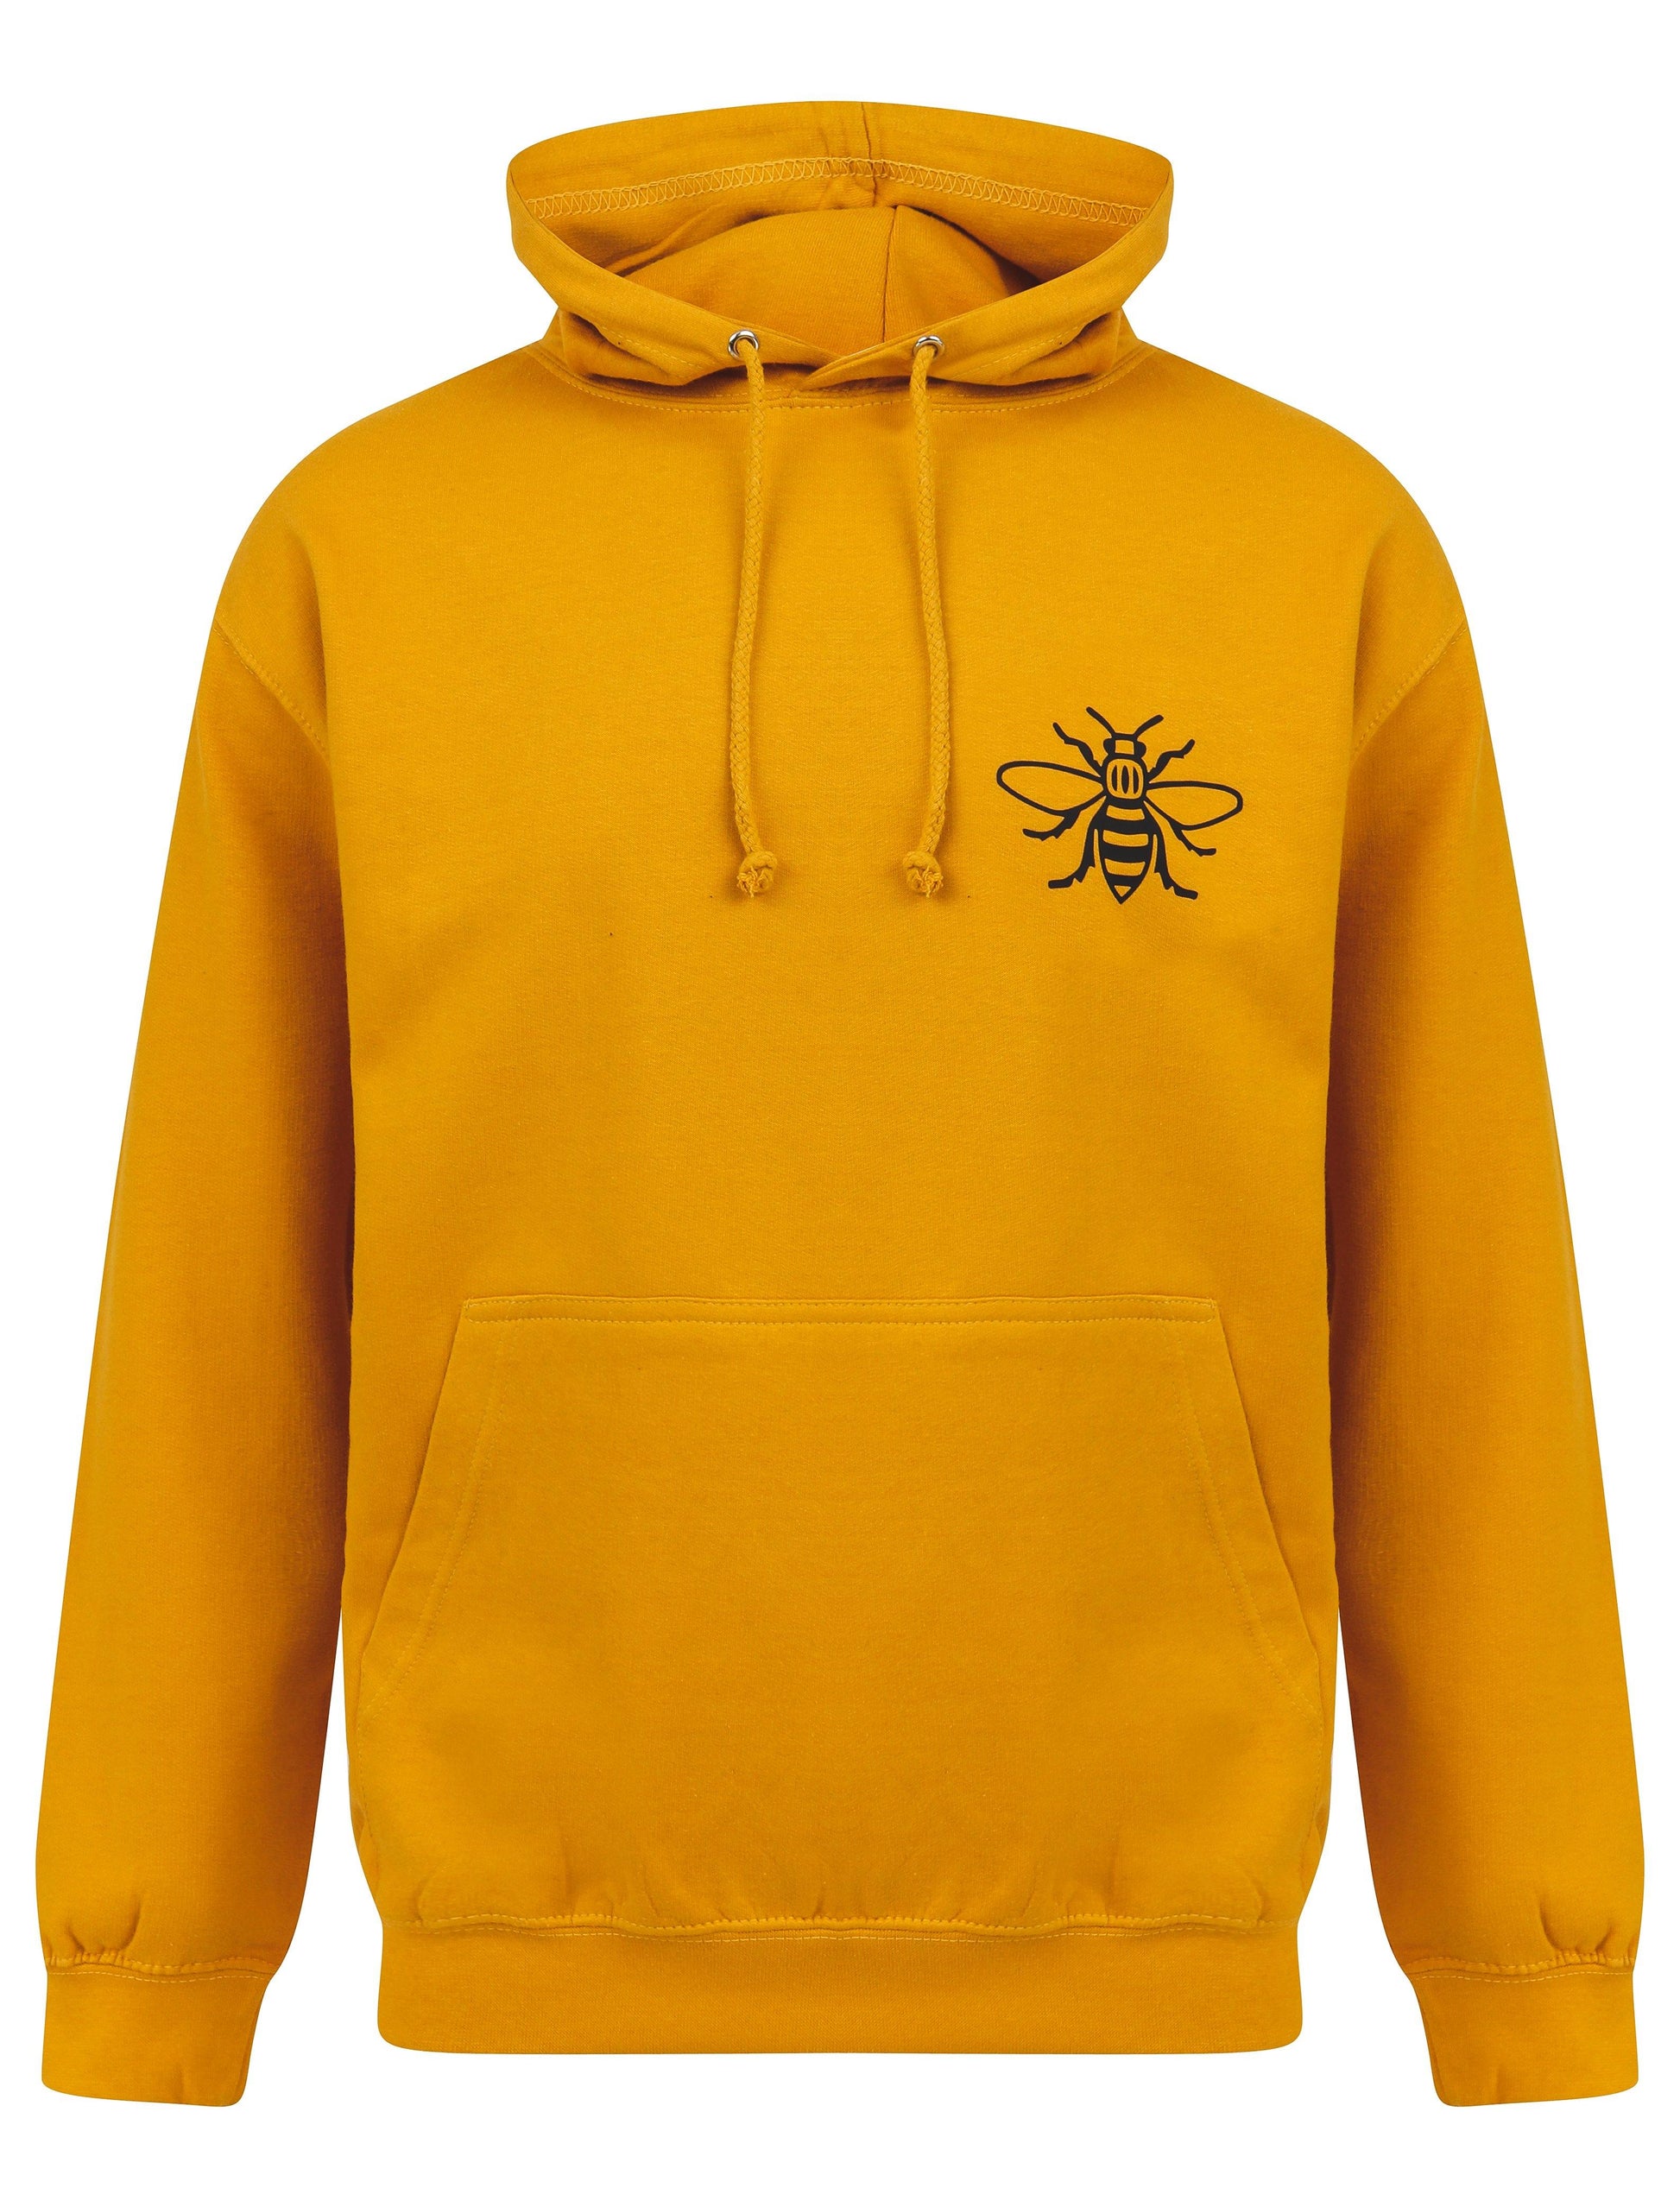 Worker Bee Mustard Hoody - The Manchester Shop